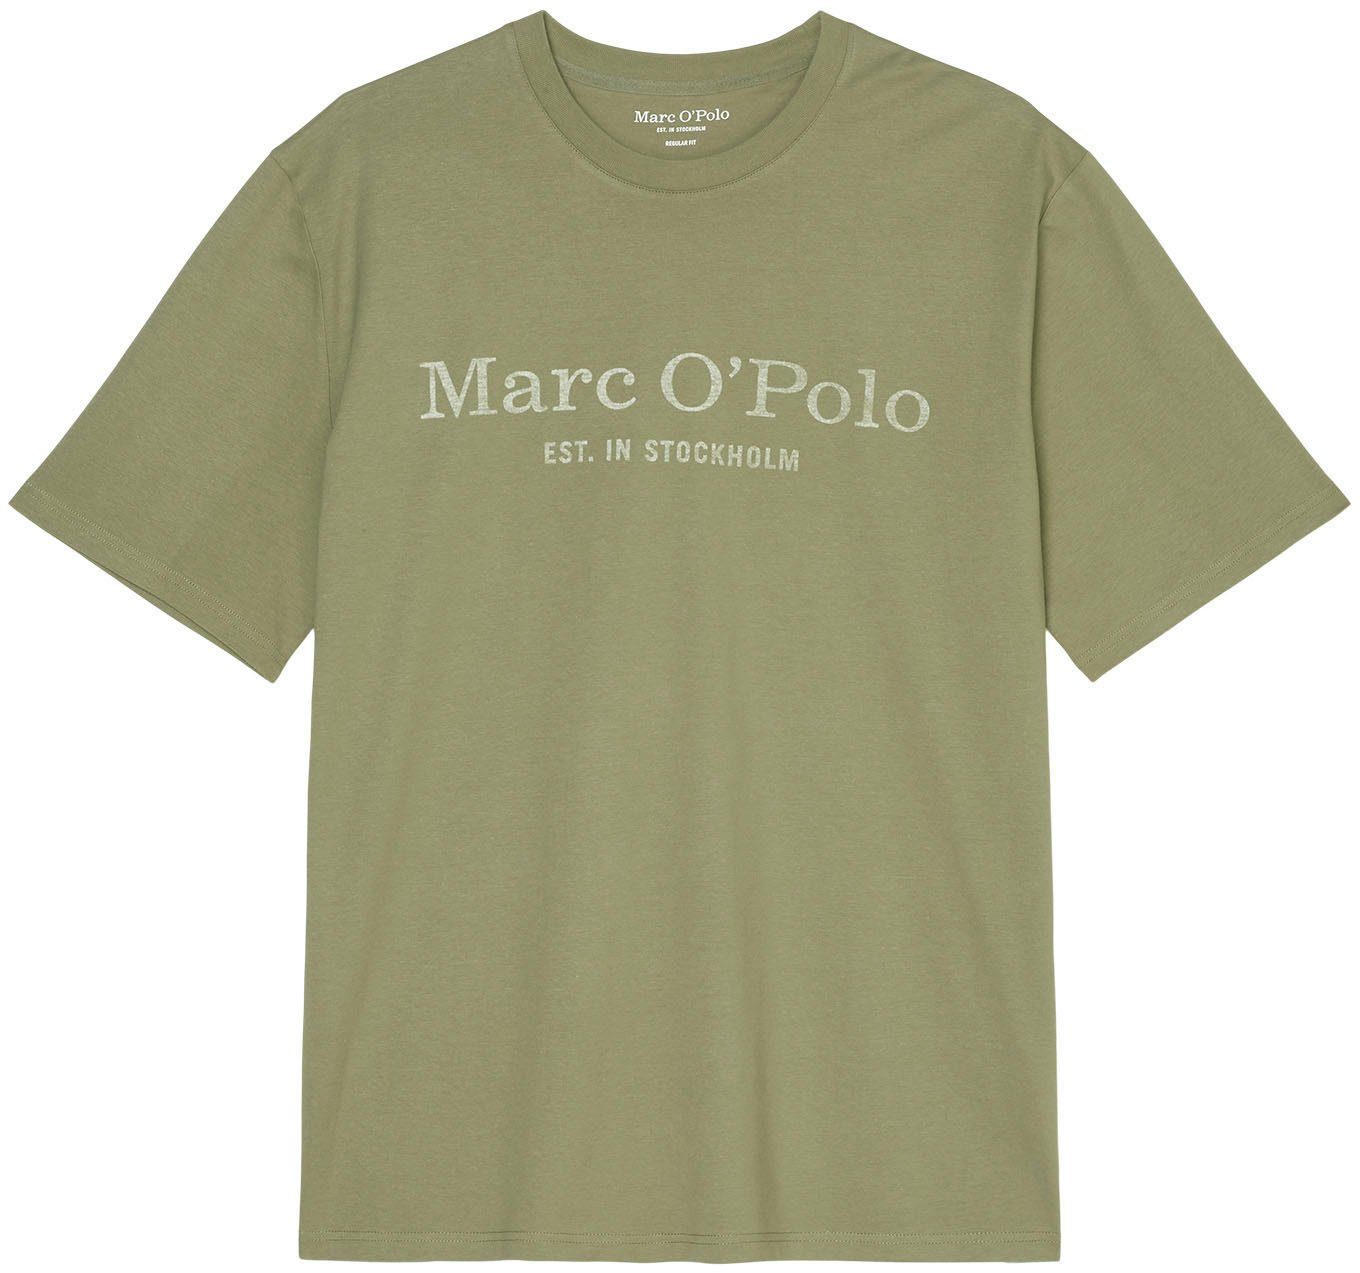 Marc O'Polo in olive T-Shirt Big&Tall-Größen